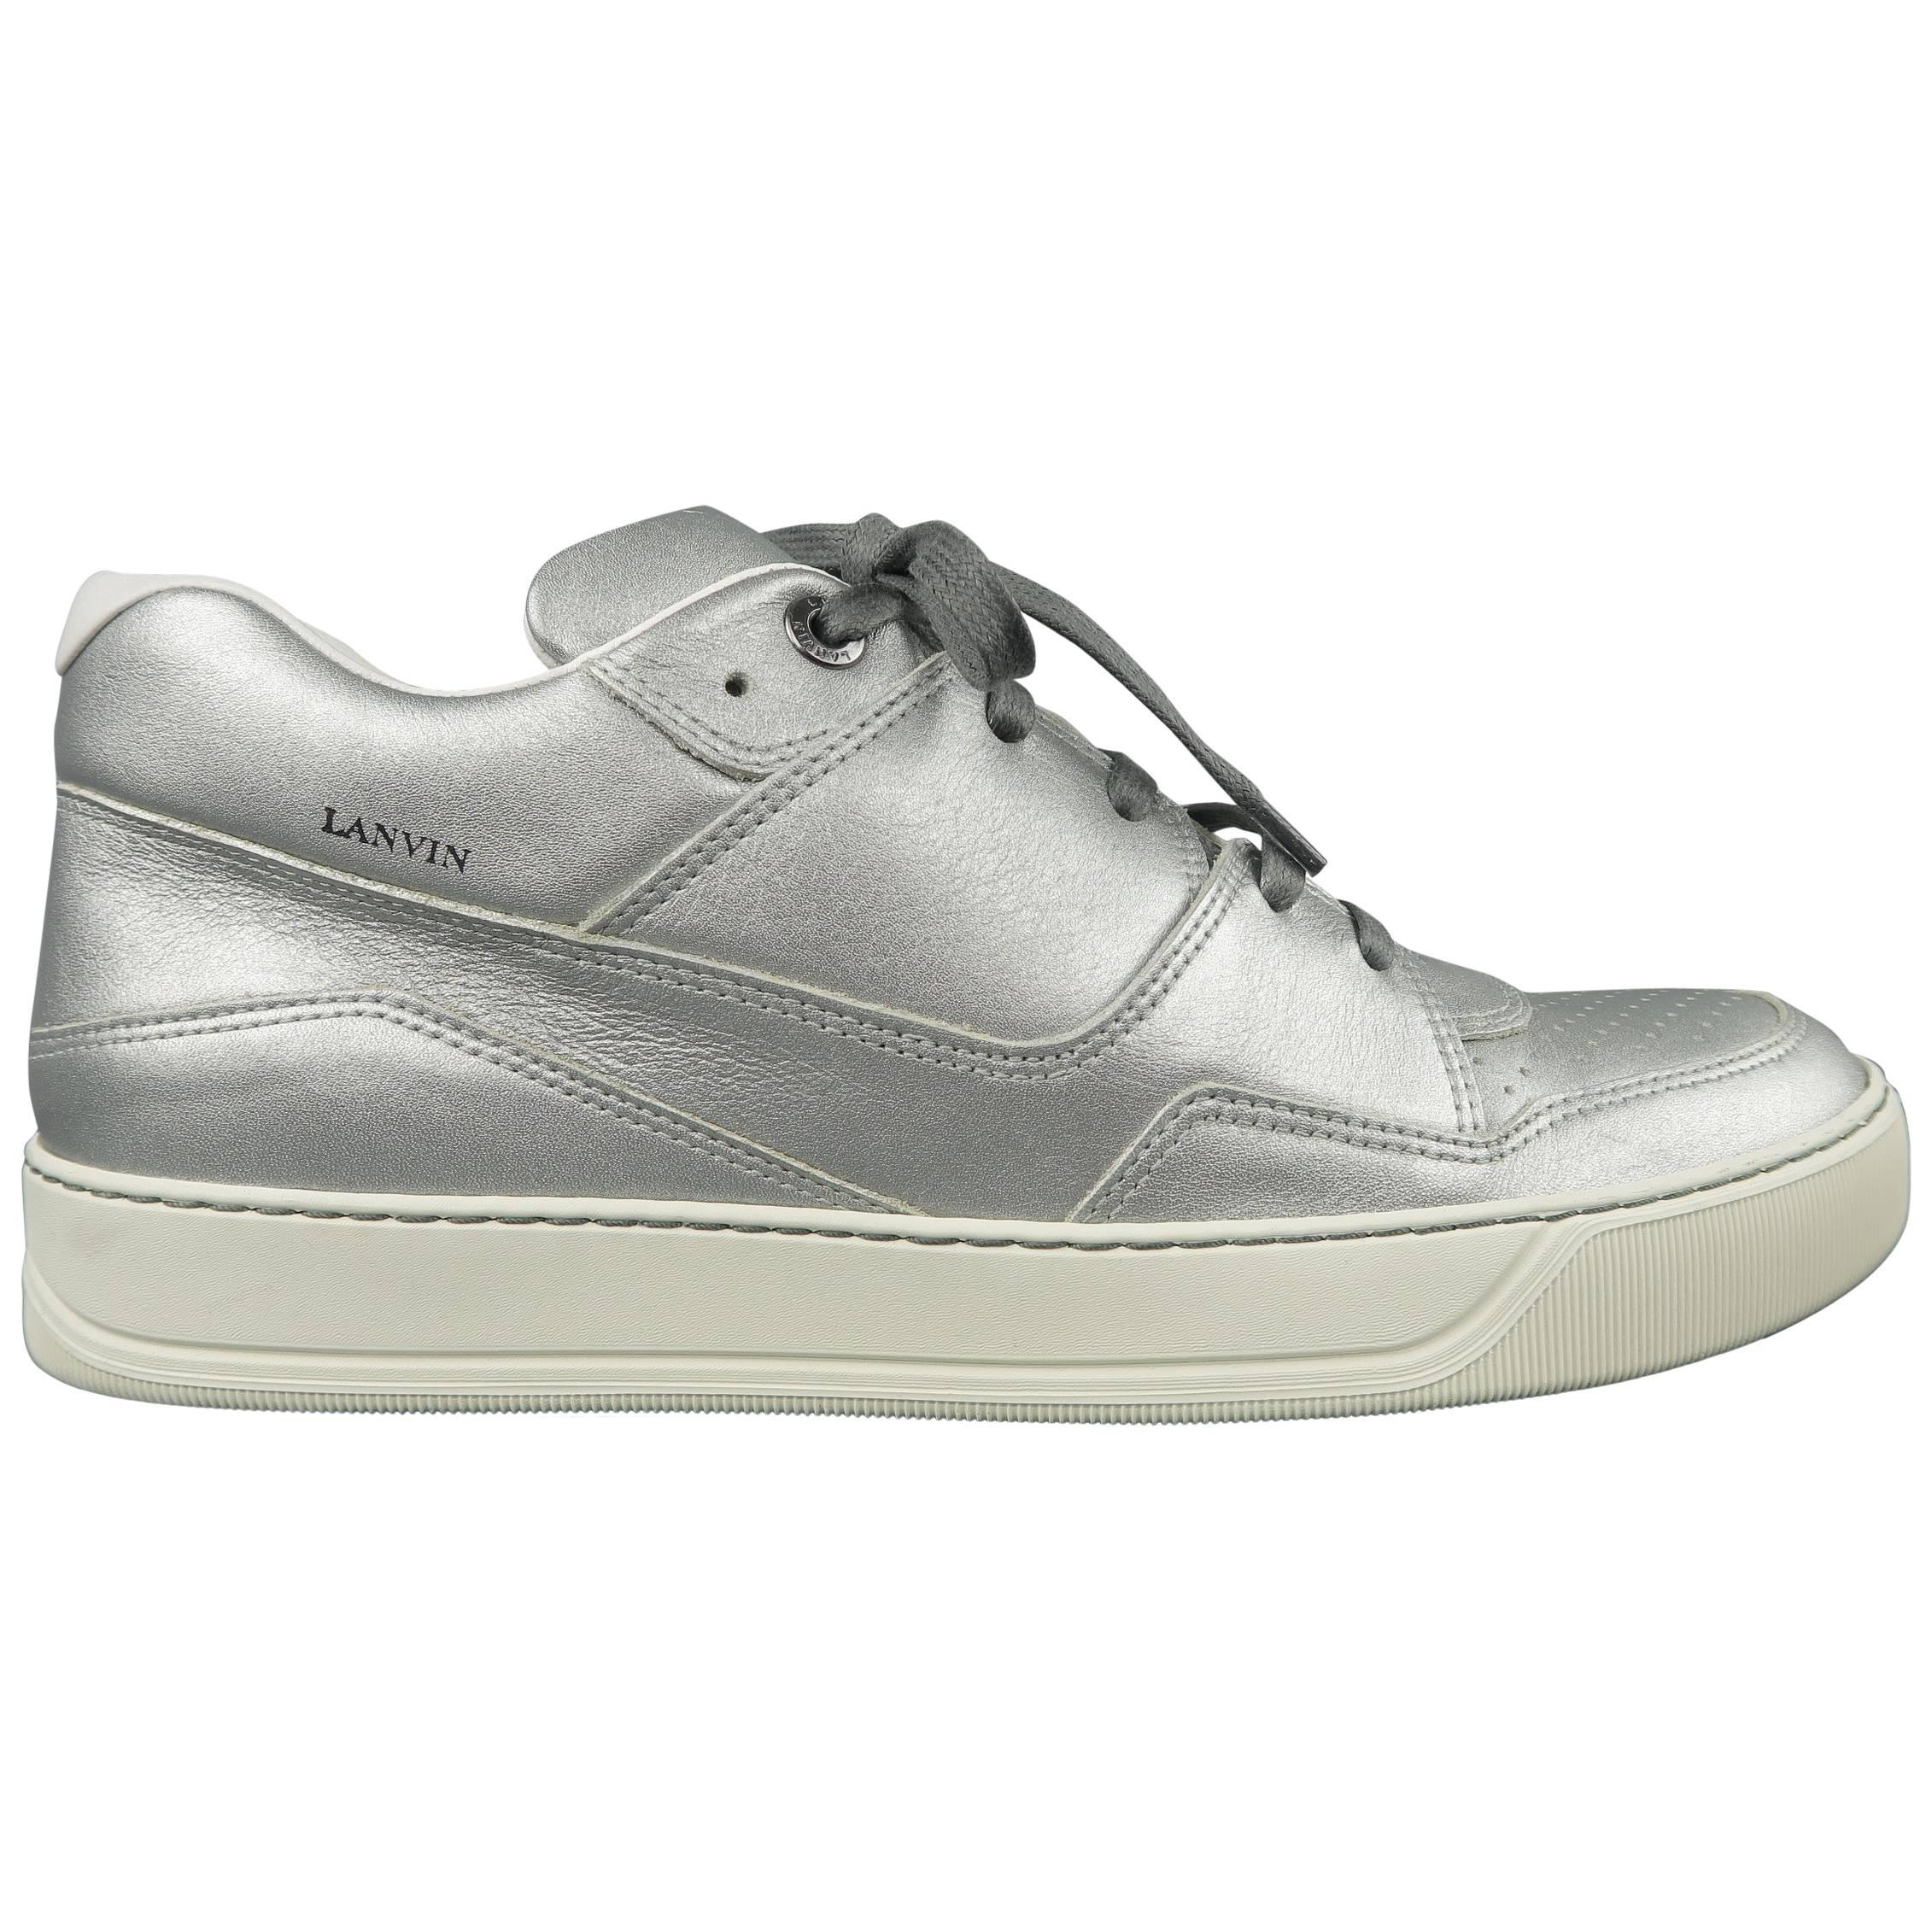 Lanvin Men's Silver Leather Mid Sneakers